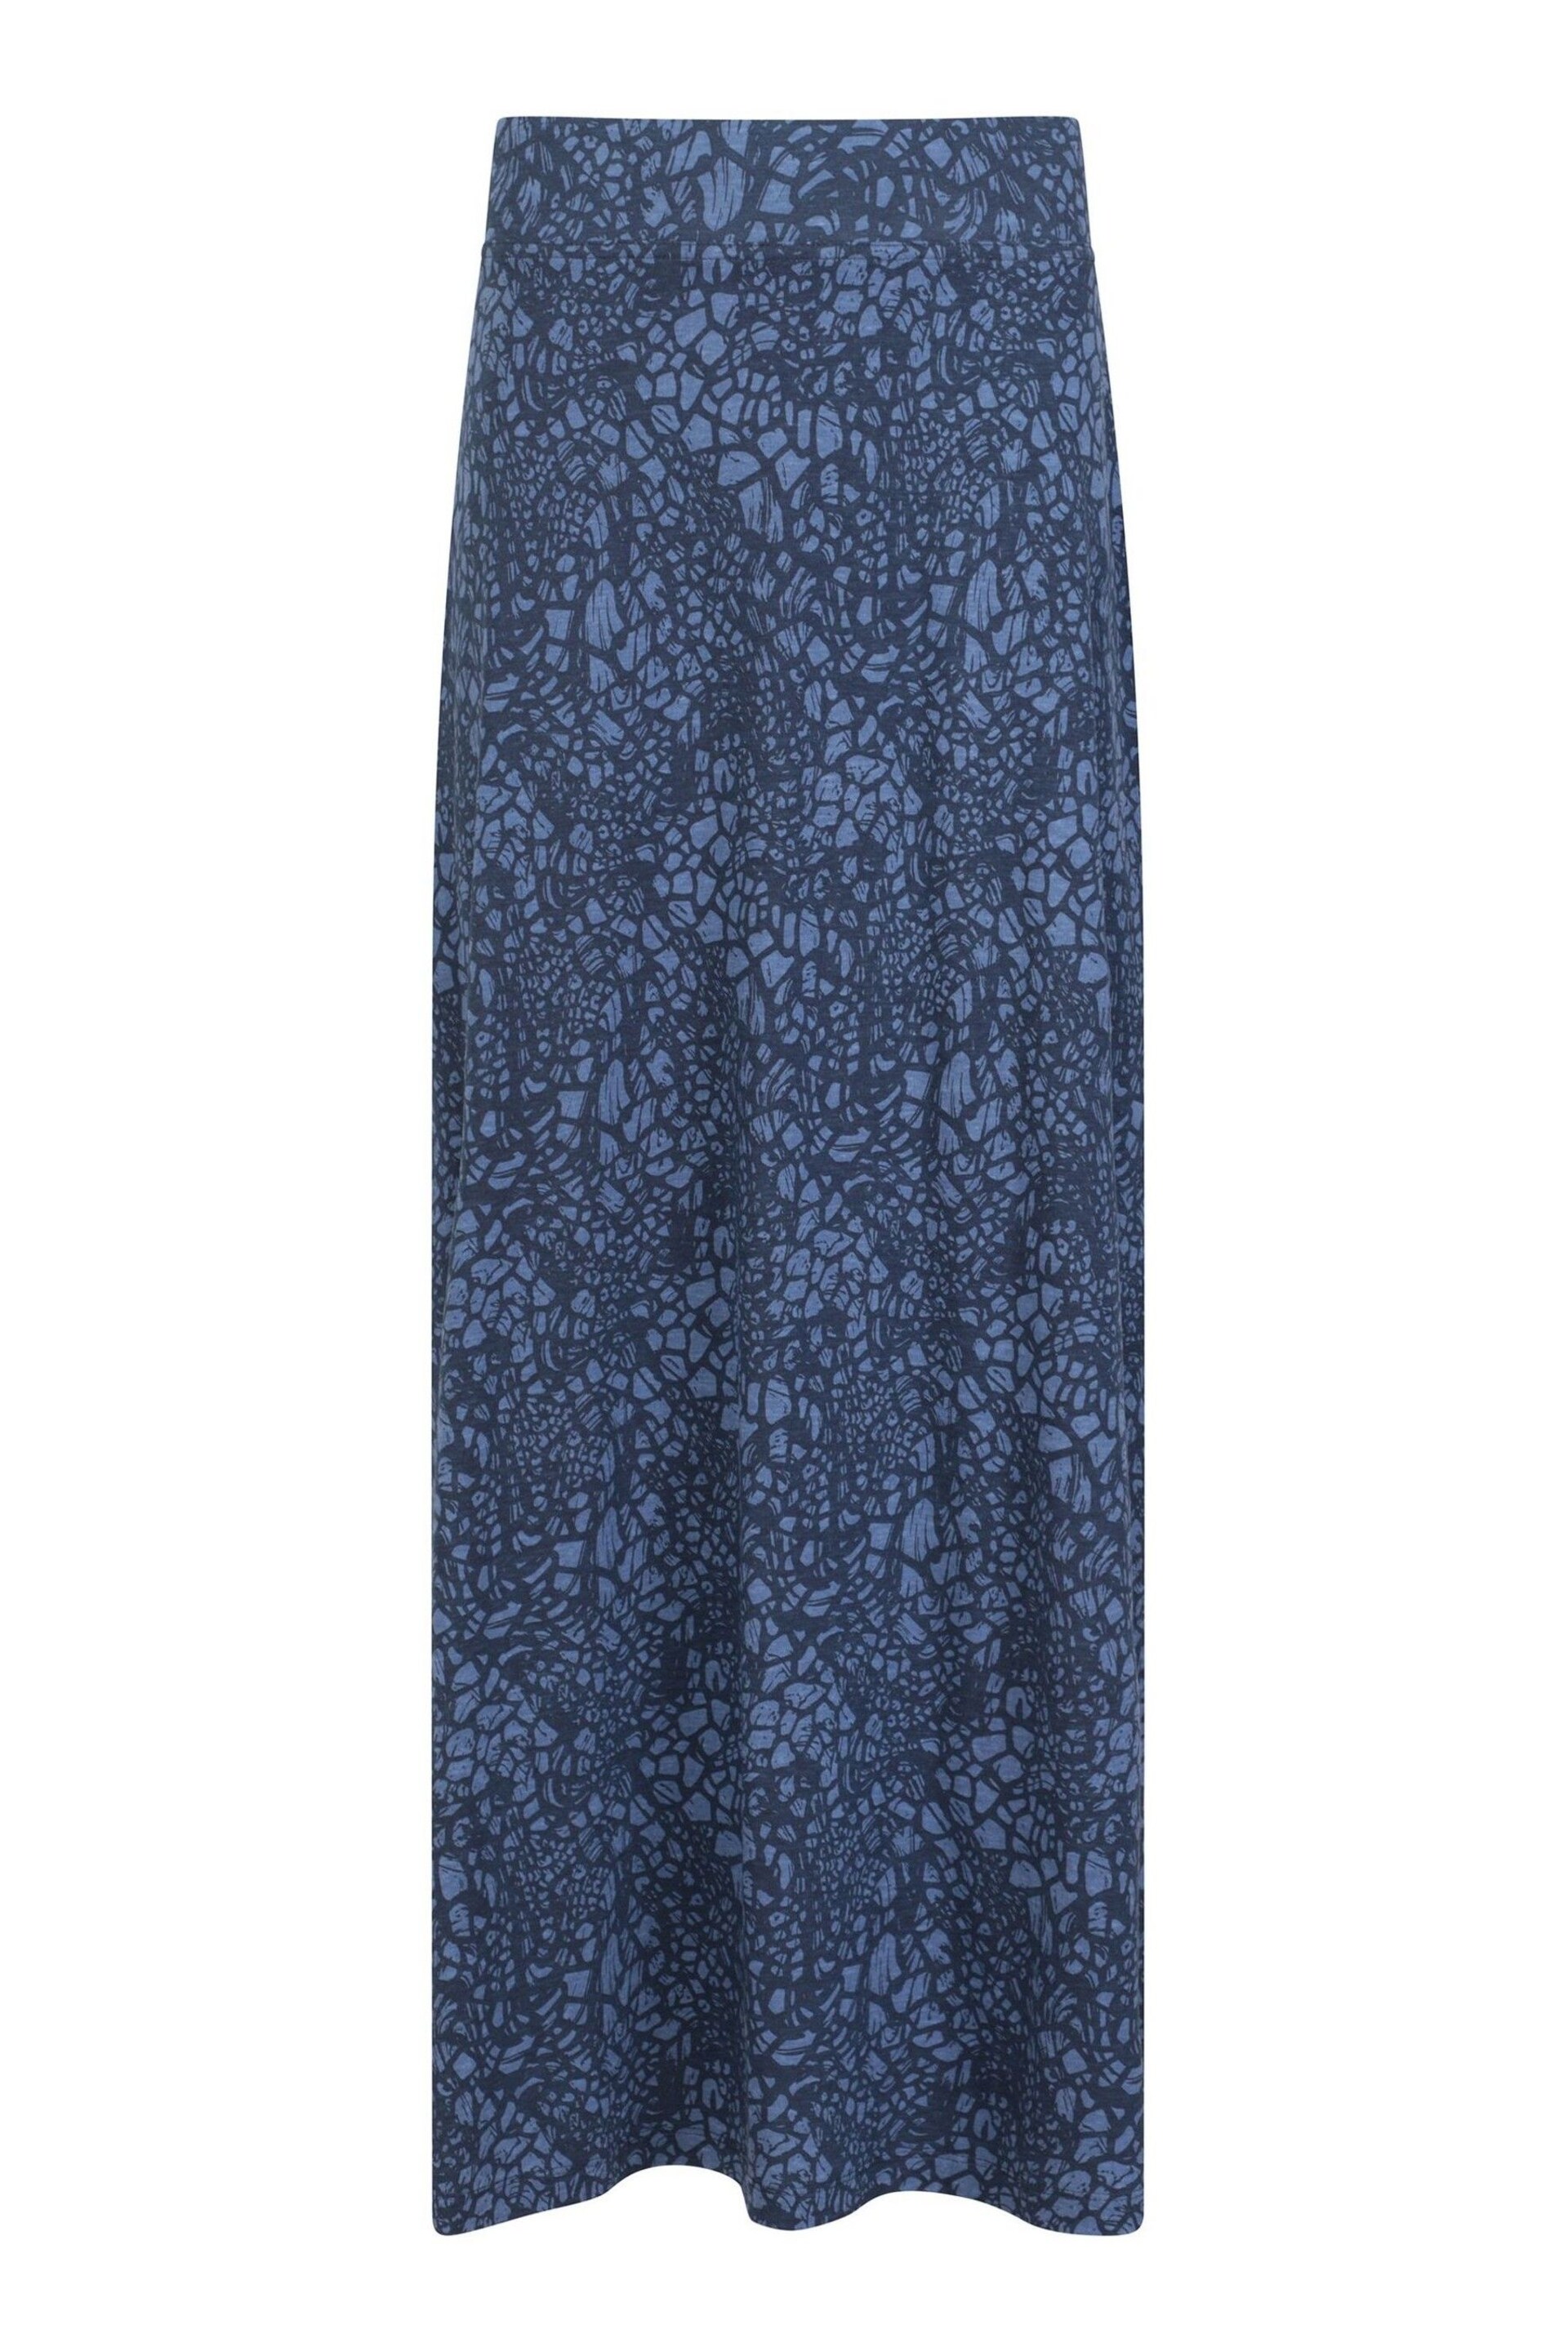 Mountain Warehouse Blue Womens Shore Long Jersey Skirt - Image 1 of 5